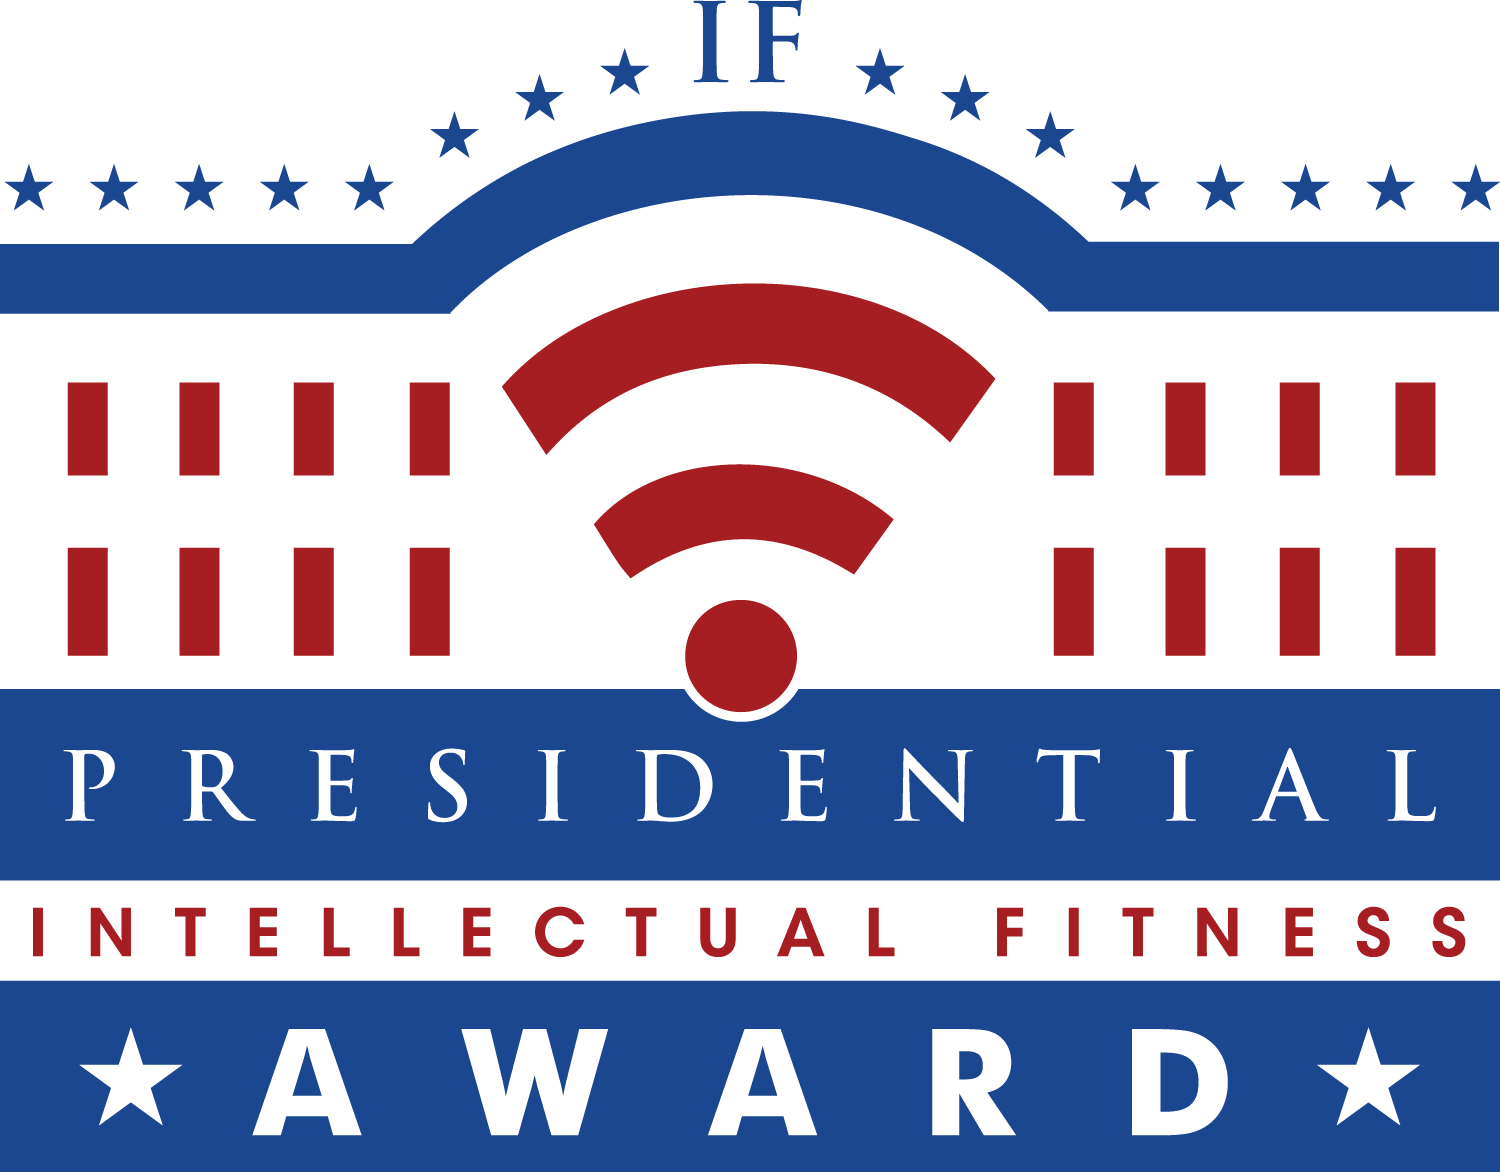 Presidential Intellectual Fitness Award logo